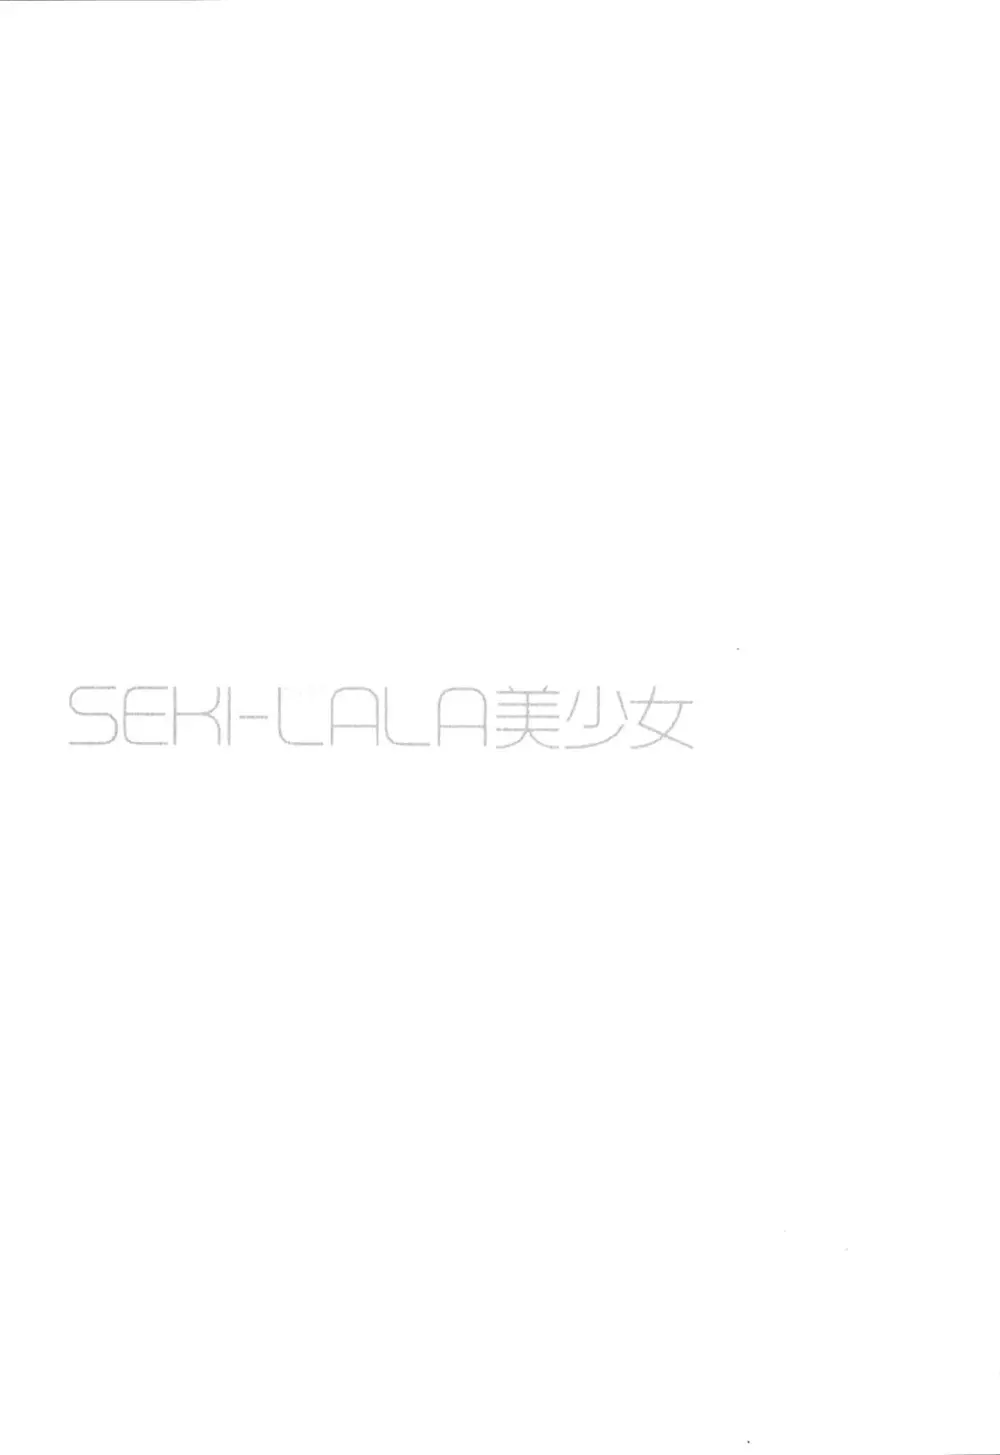 SEKI-LALA美少女 38ページ